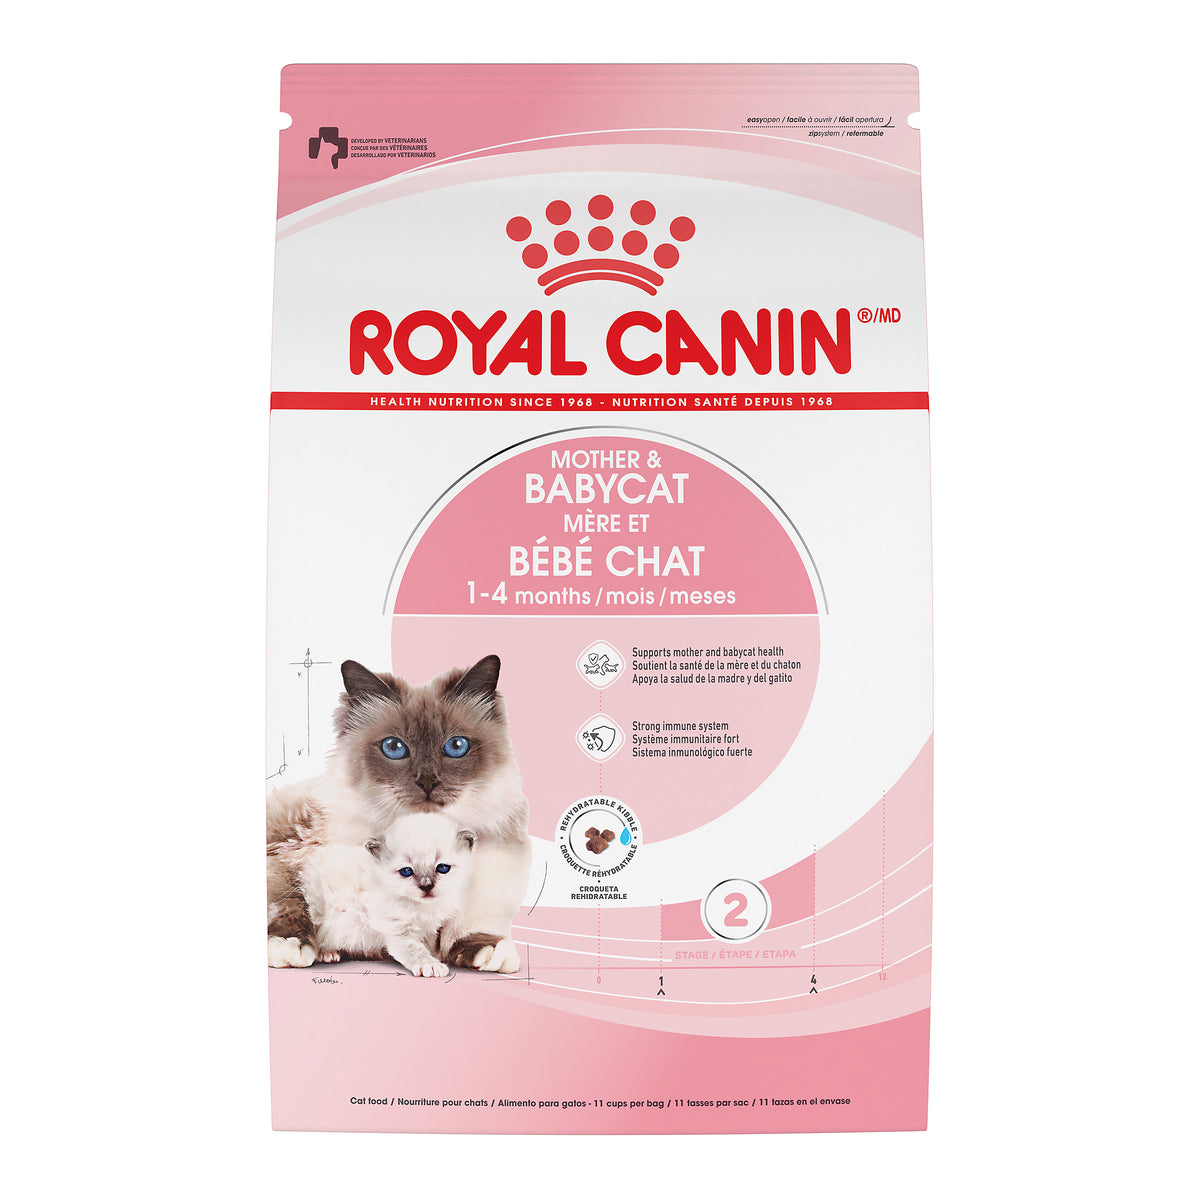 Royal Canin Babycat Food